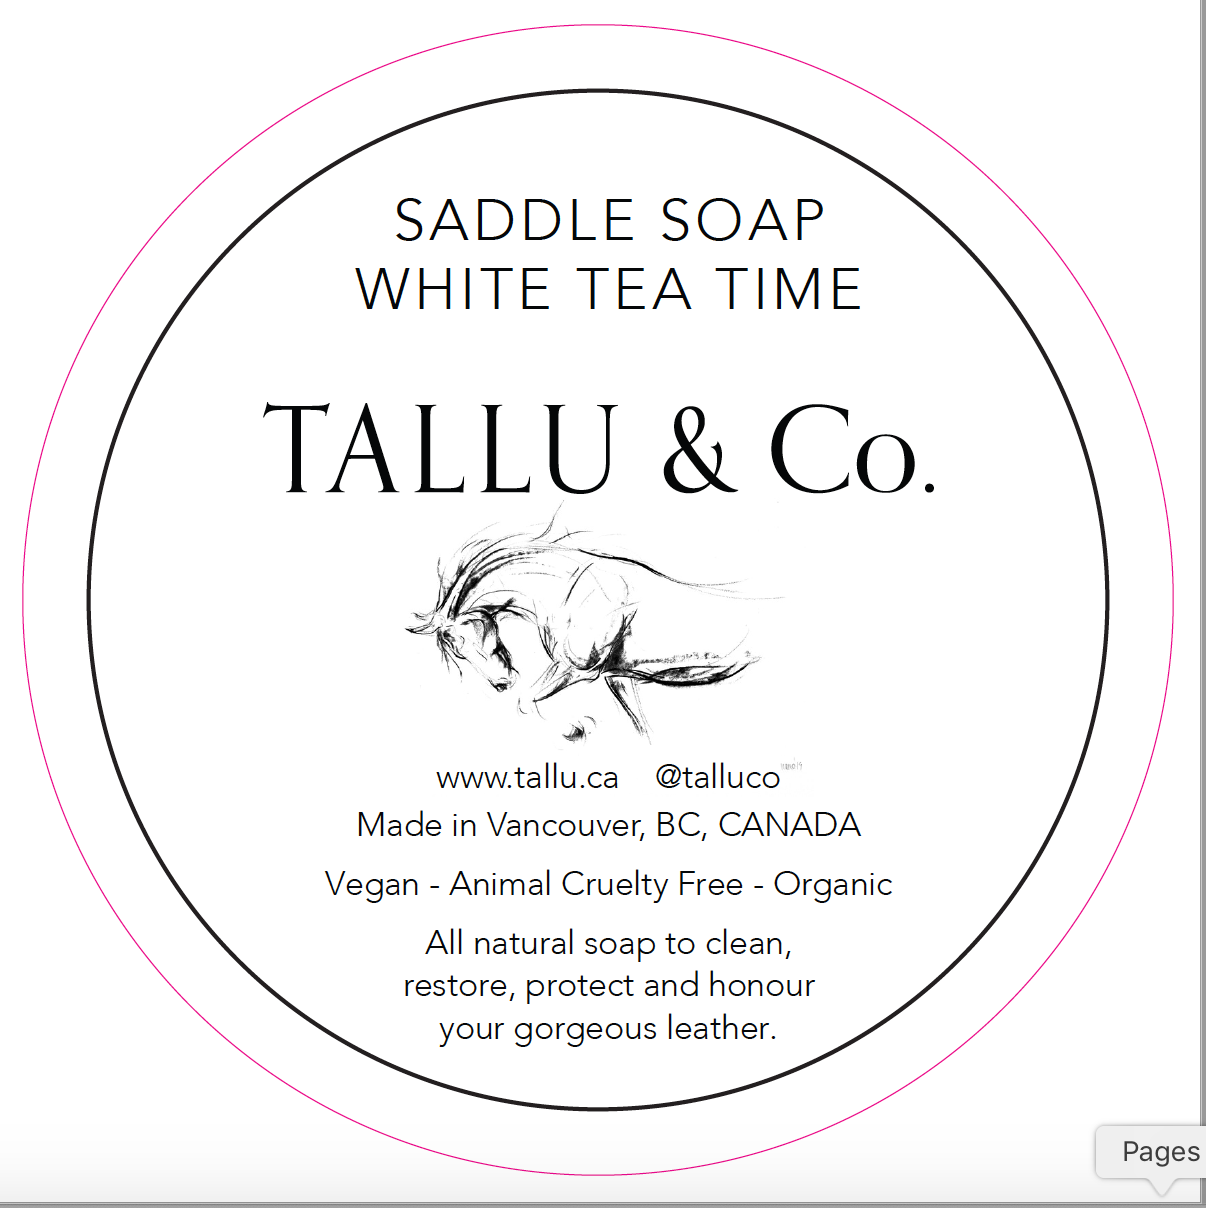 Saddle Soap